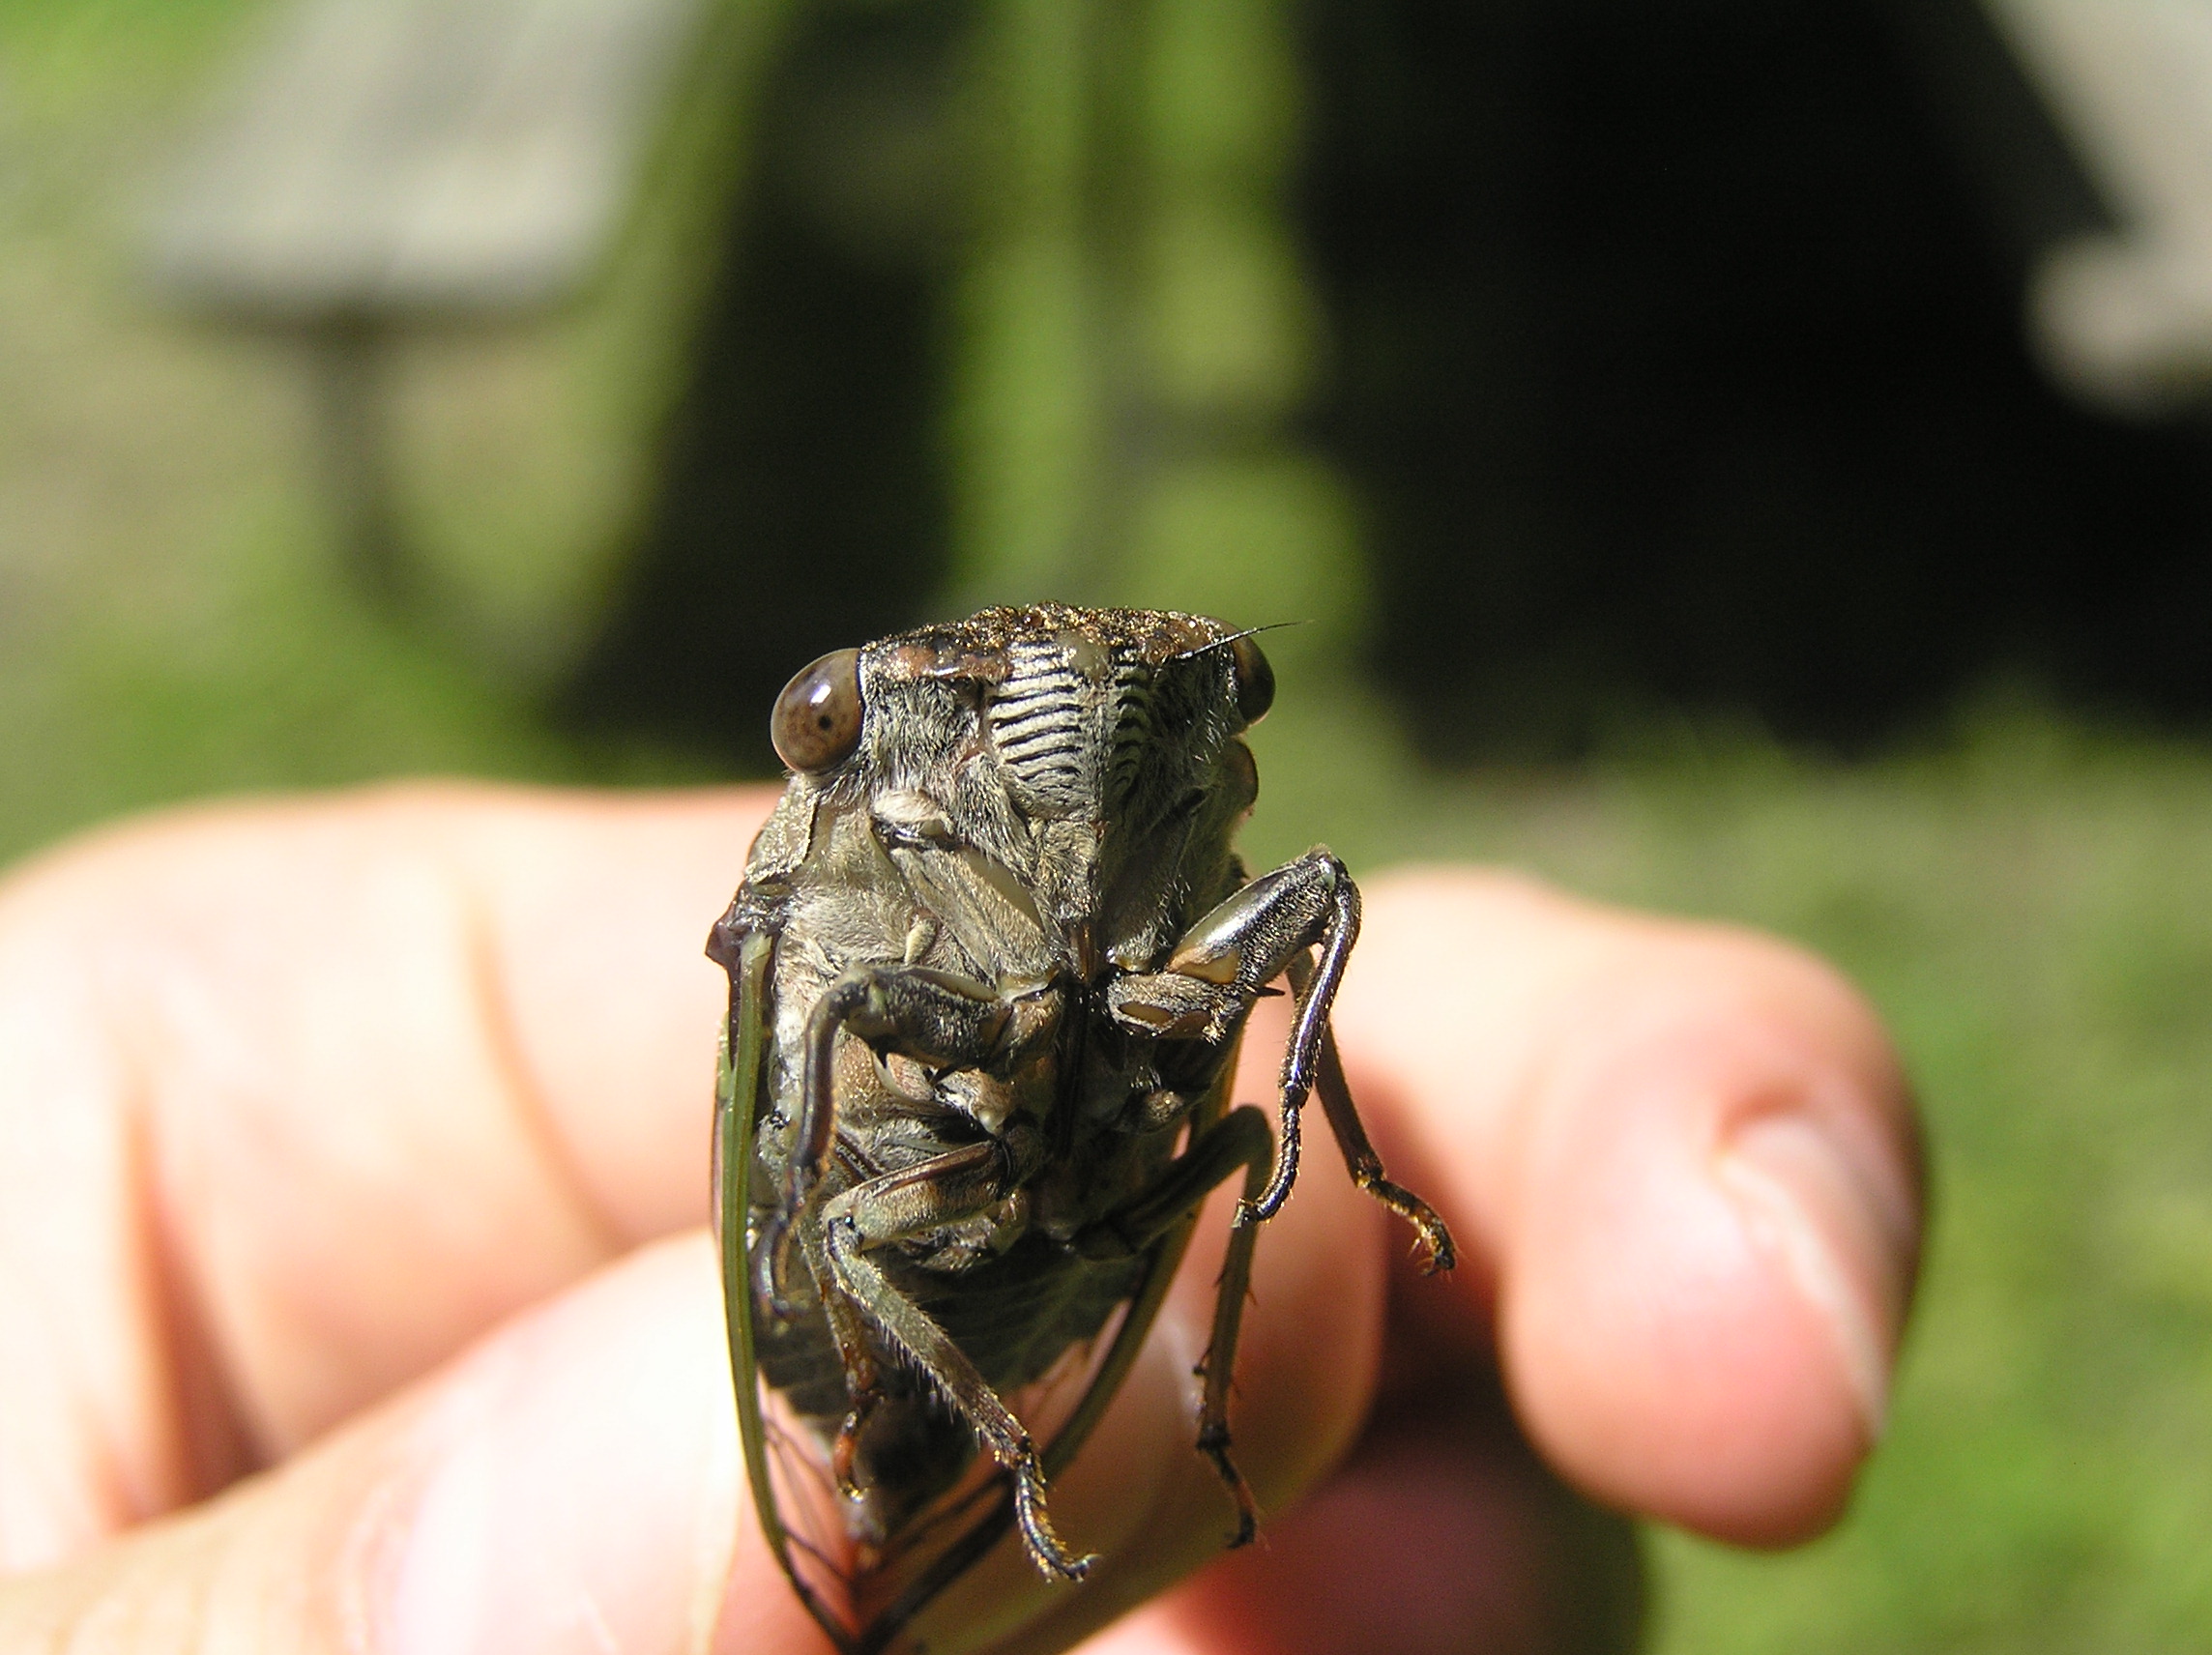 A hand holding an adult cicada